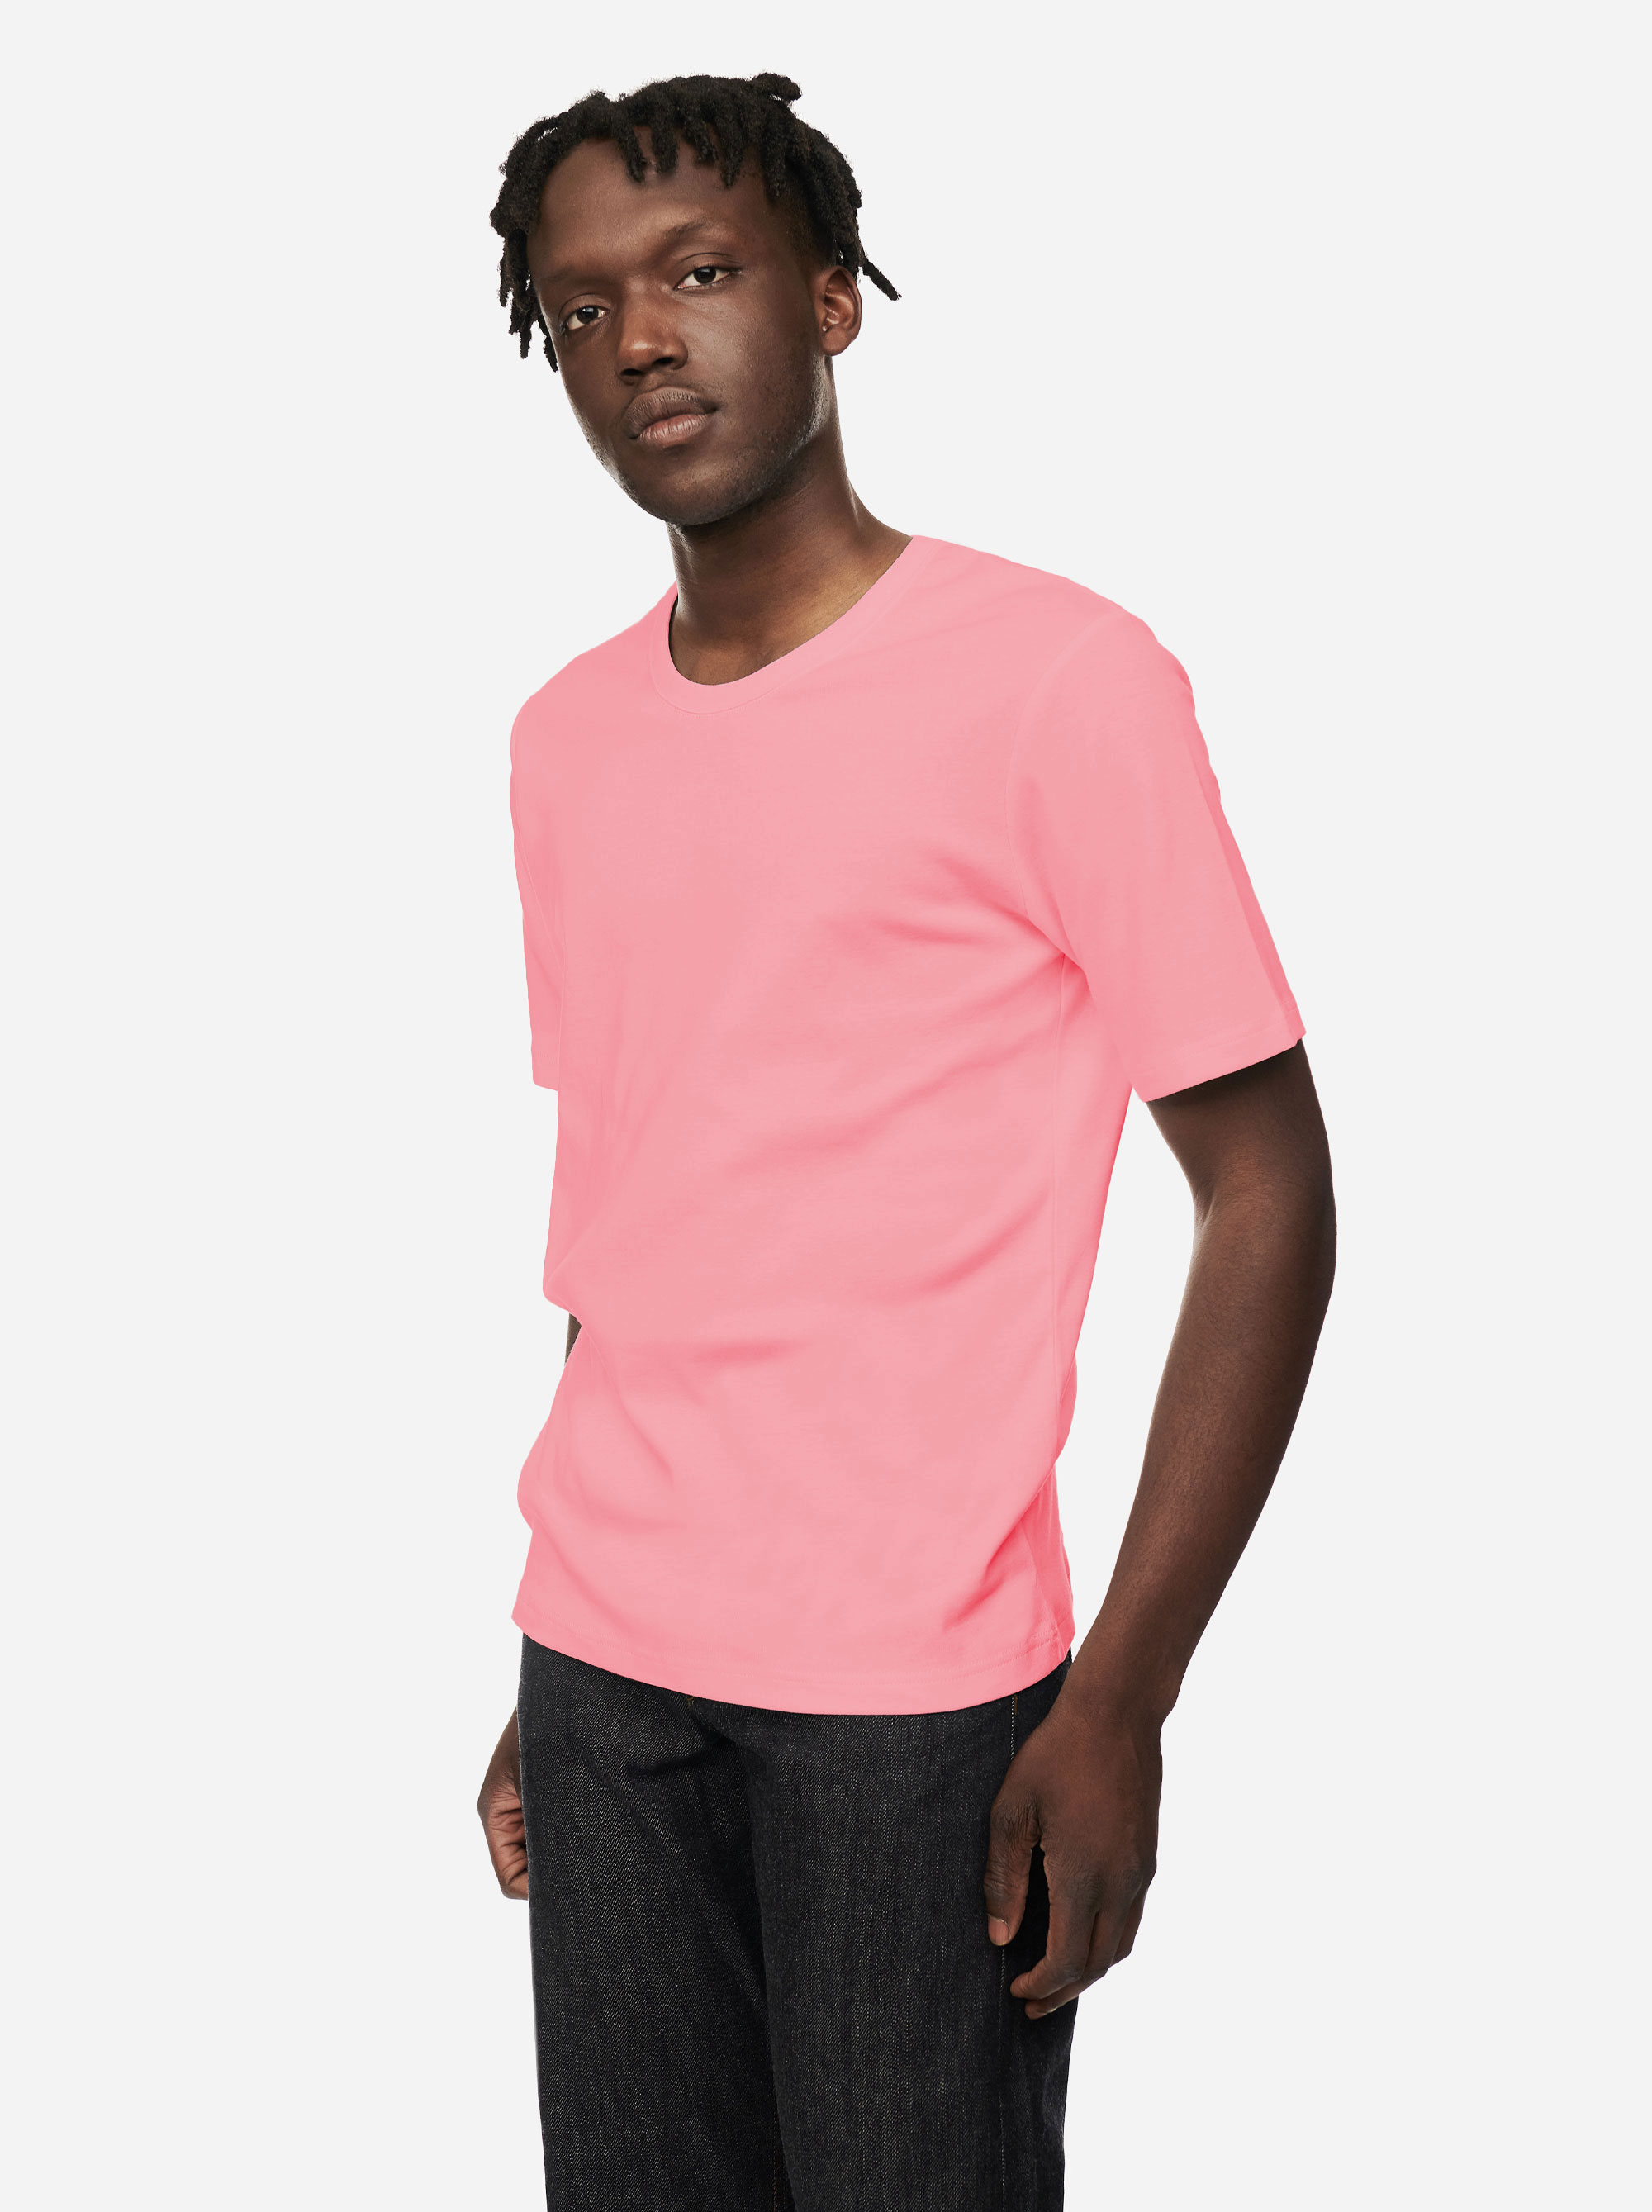 Teym - The T-Shirt - Men - Pink - 1